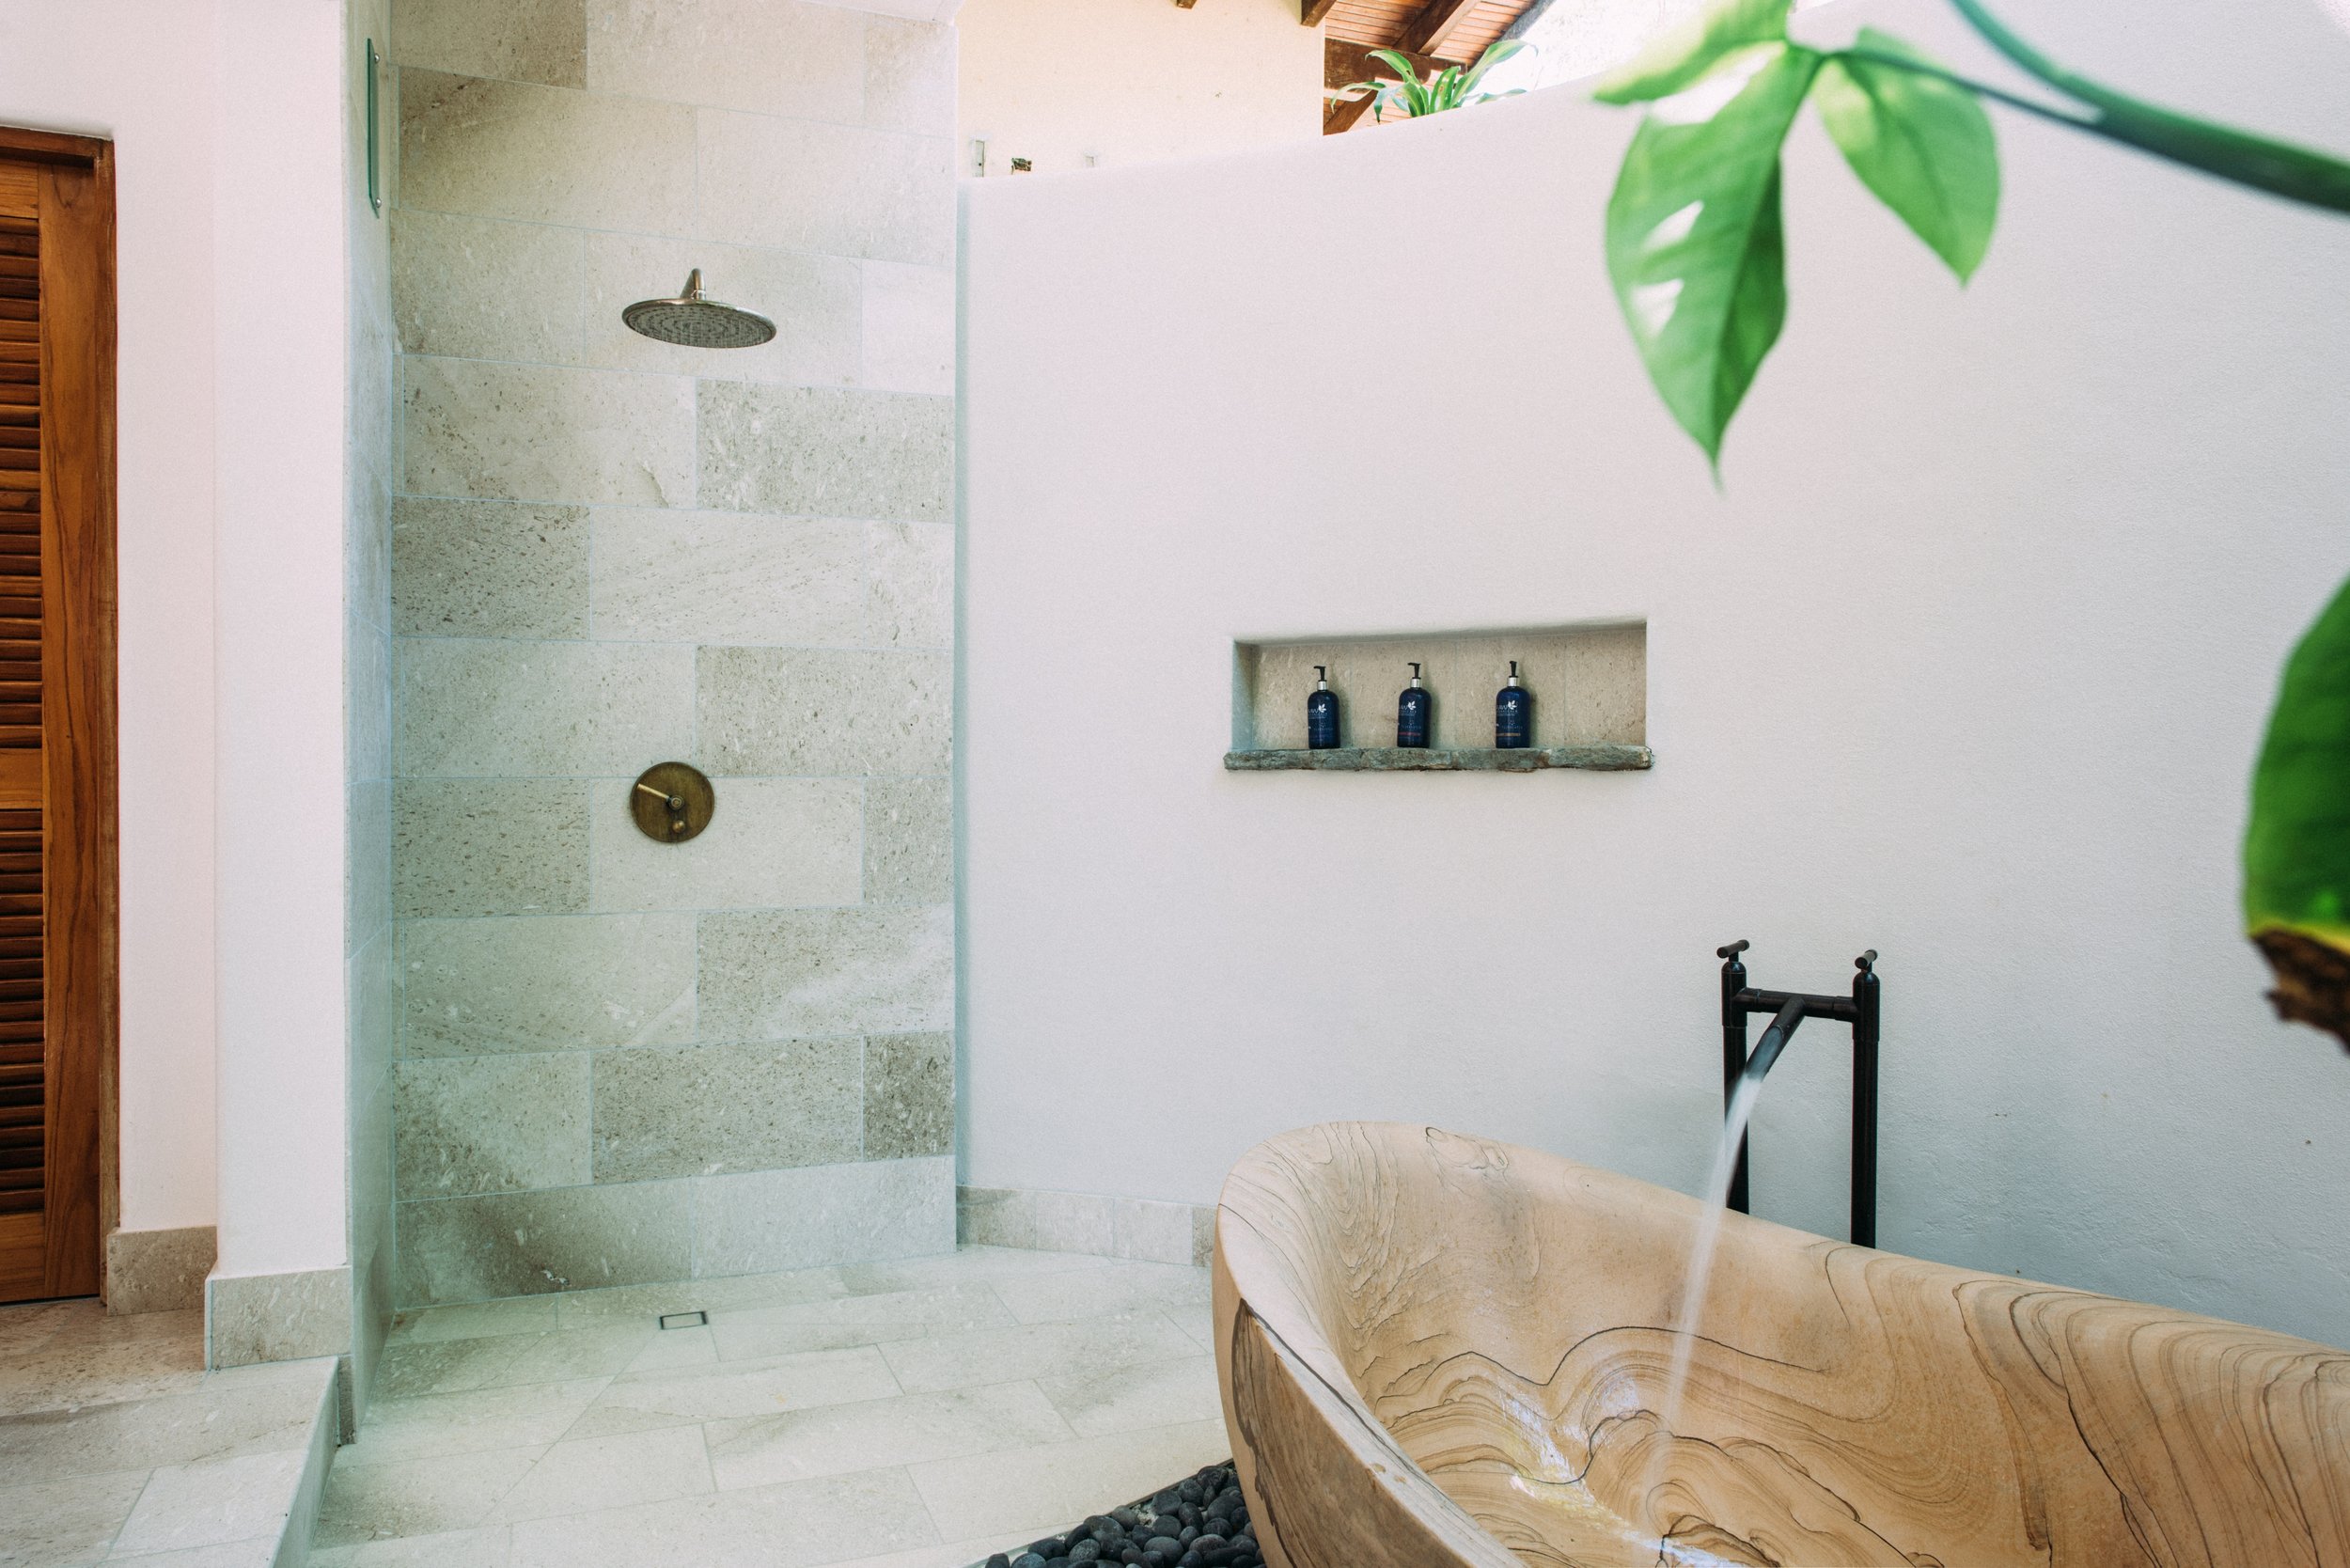 villa-private-bathroom-tub-and-shower.jpg